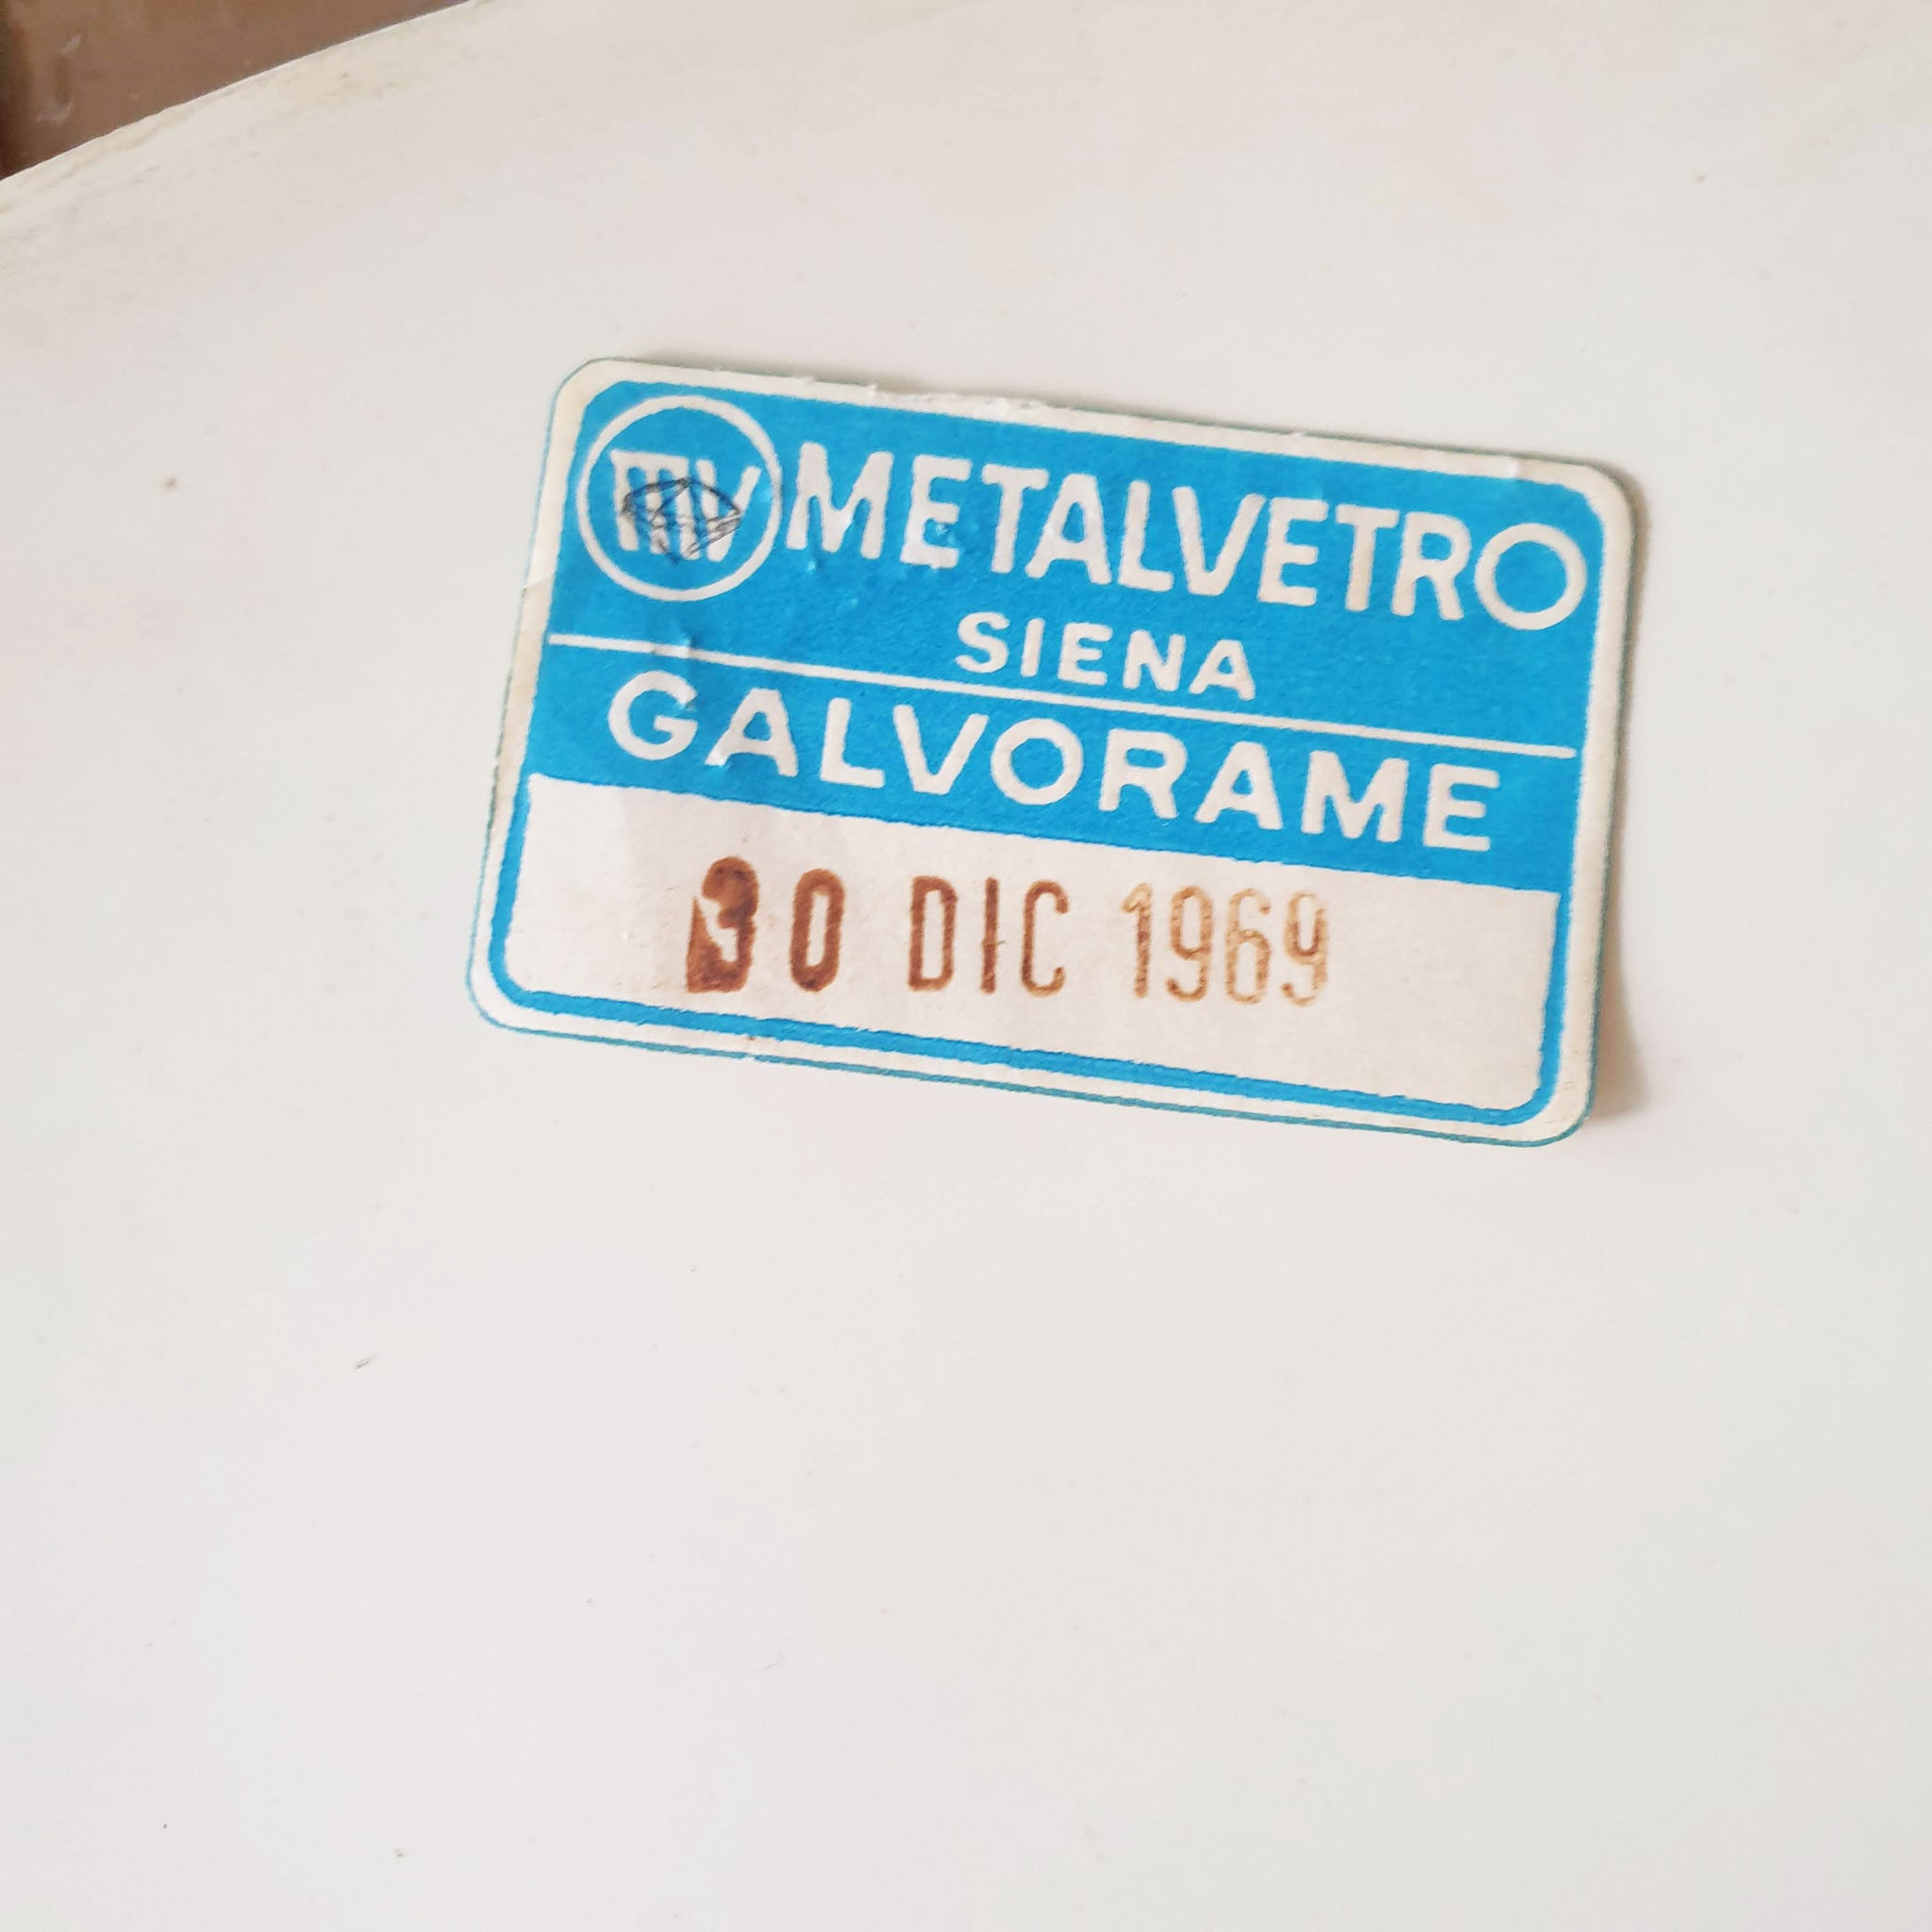 1969 Italian oval frameless mirror by Metalvetro Galvorame